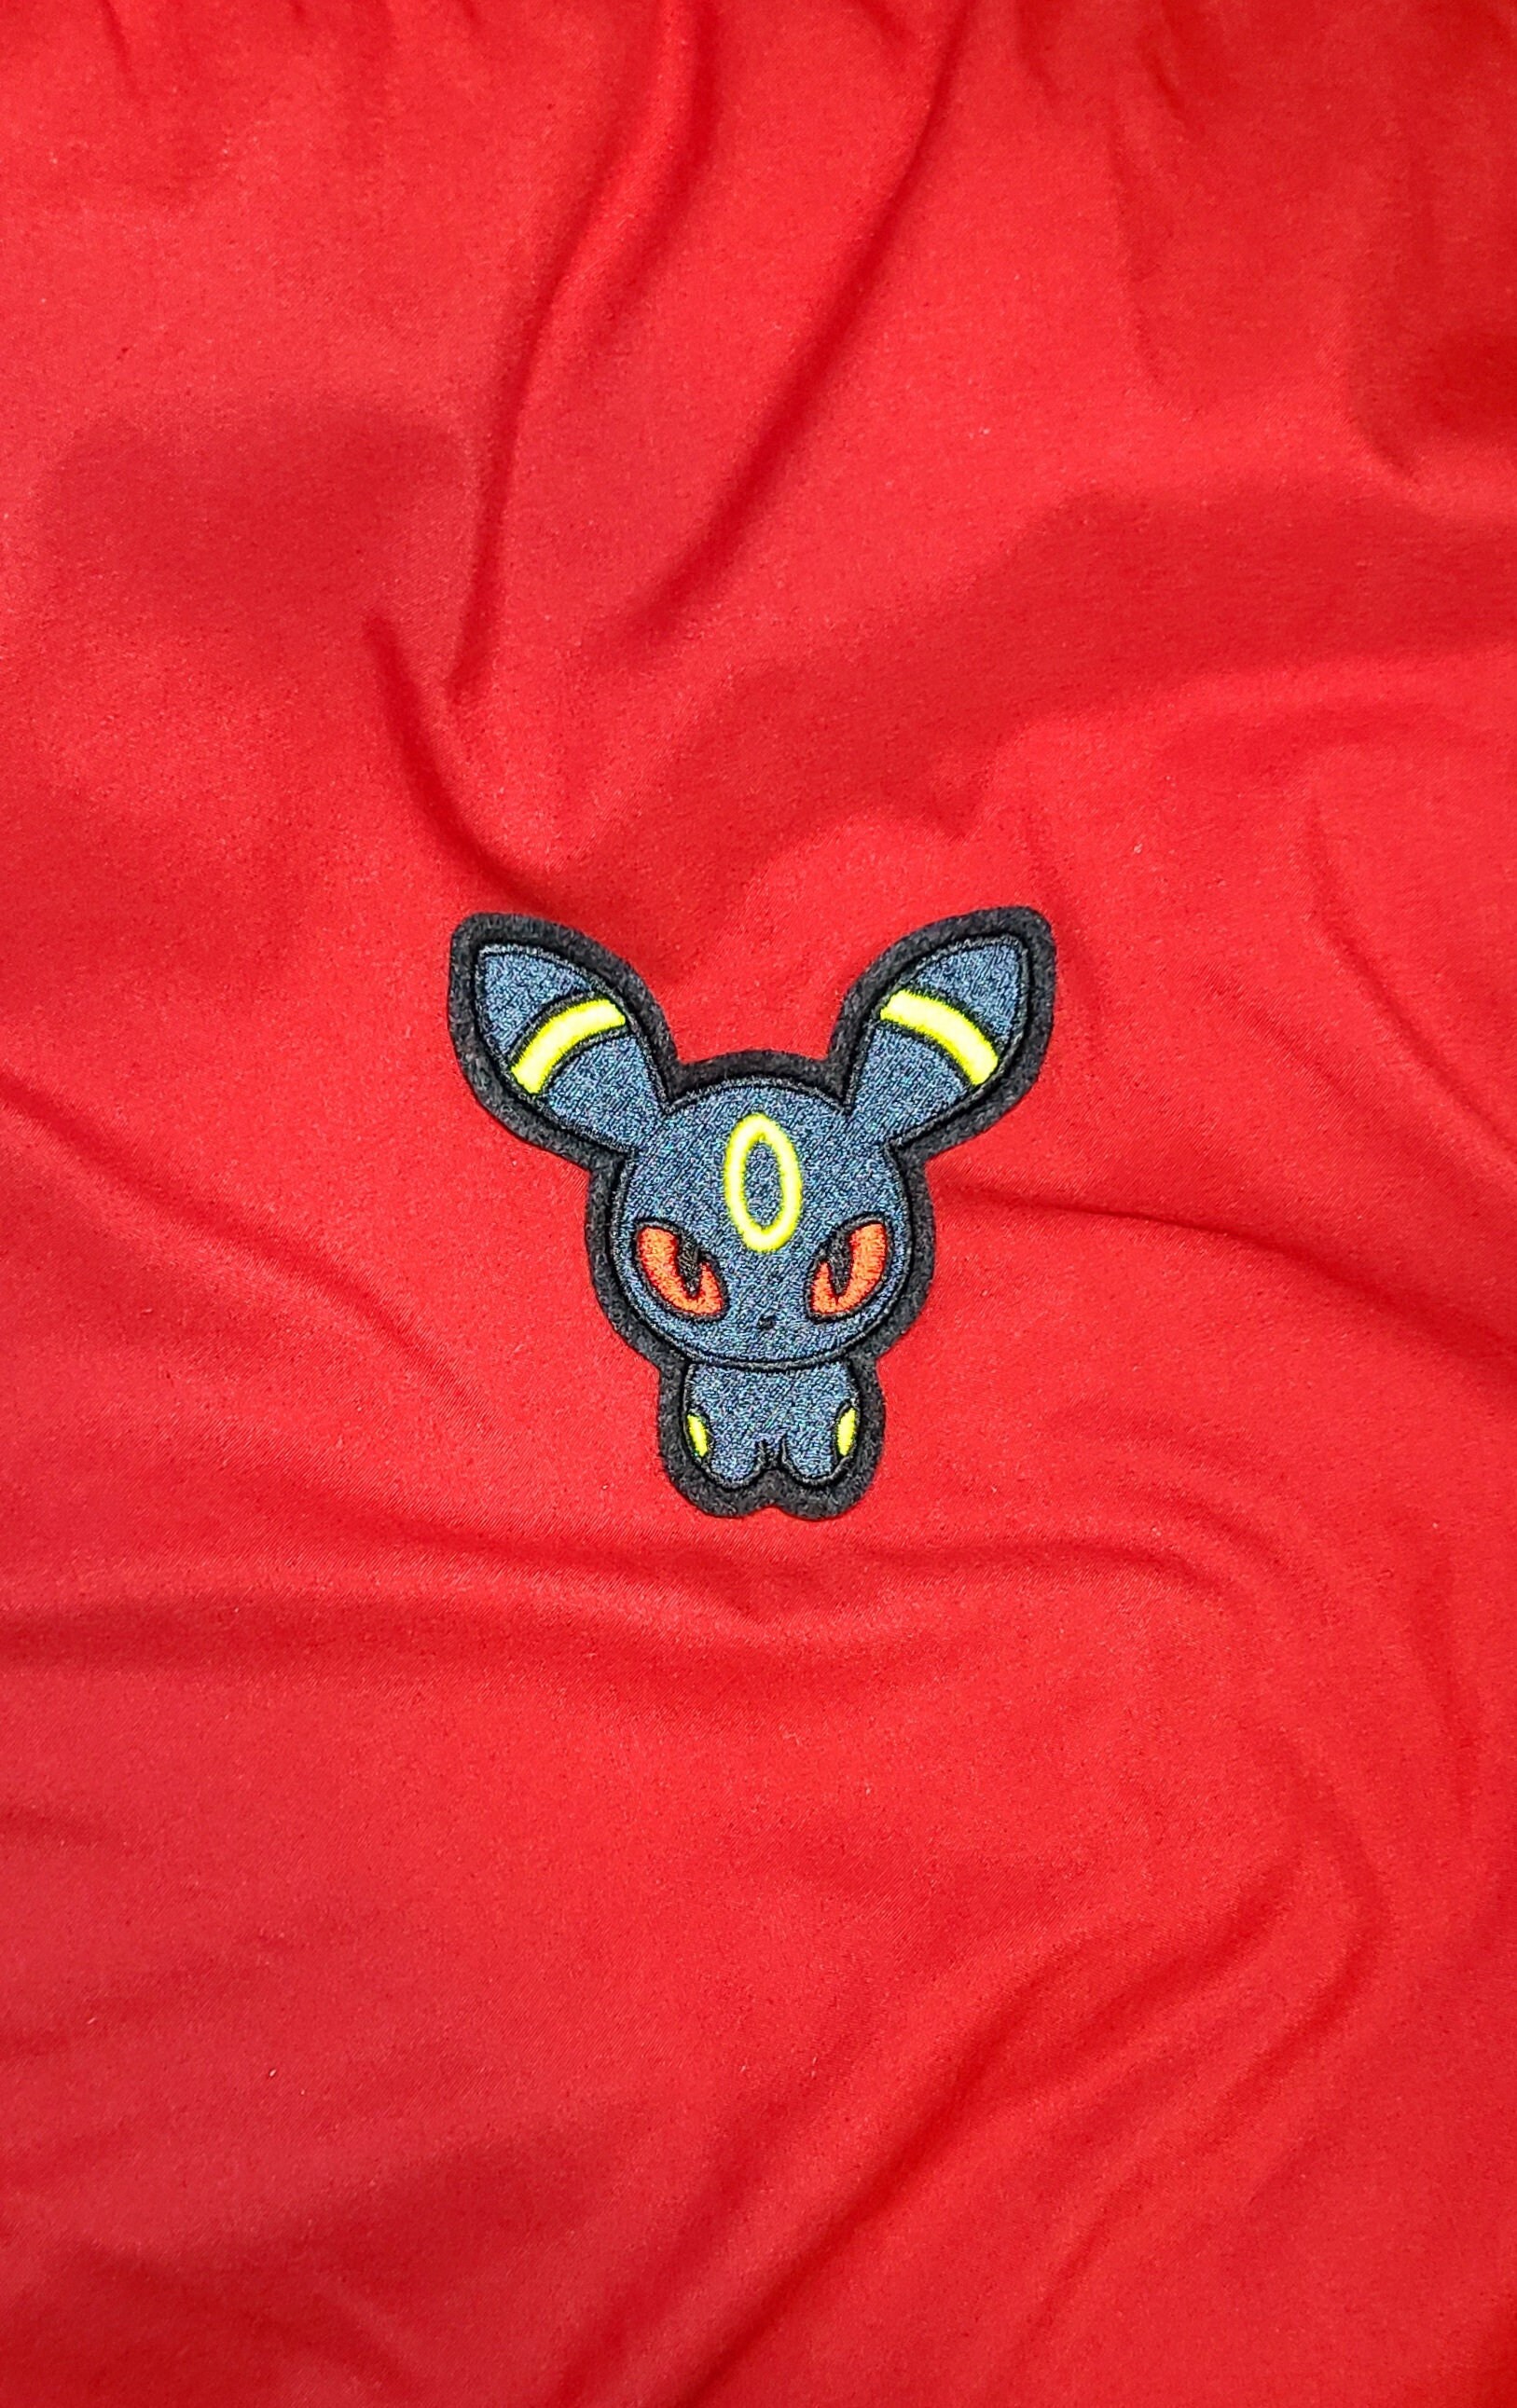 Charmander Iron on Patch Shiny Metallic Embroidered. Pokemon